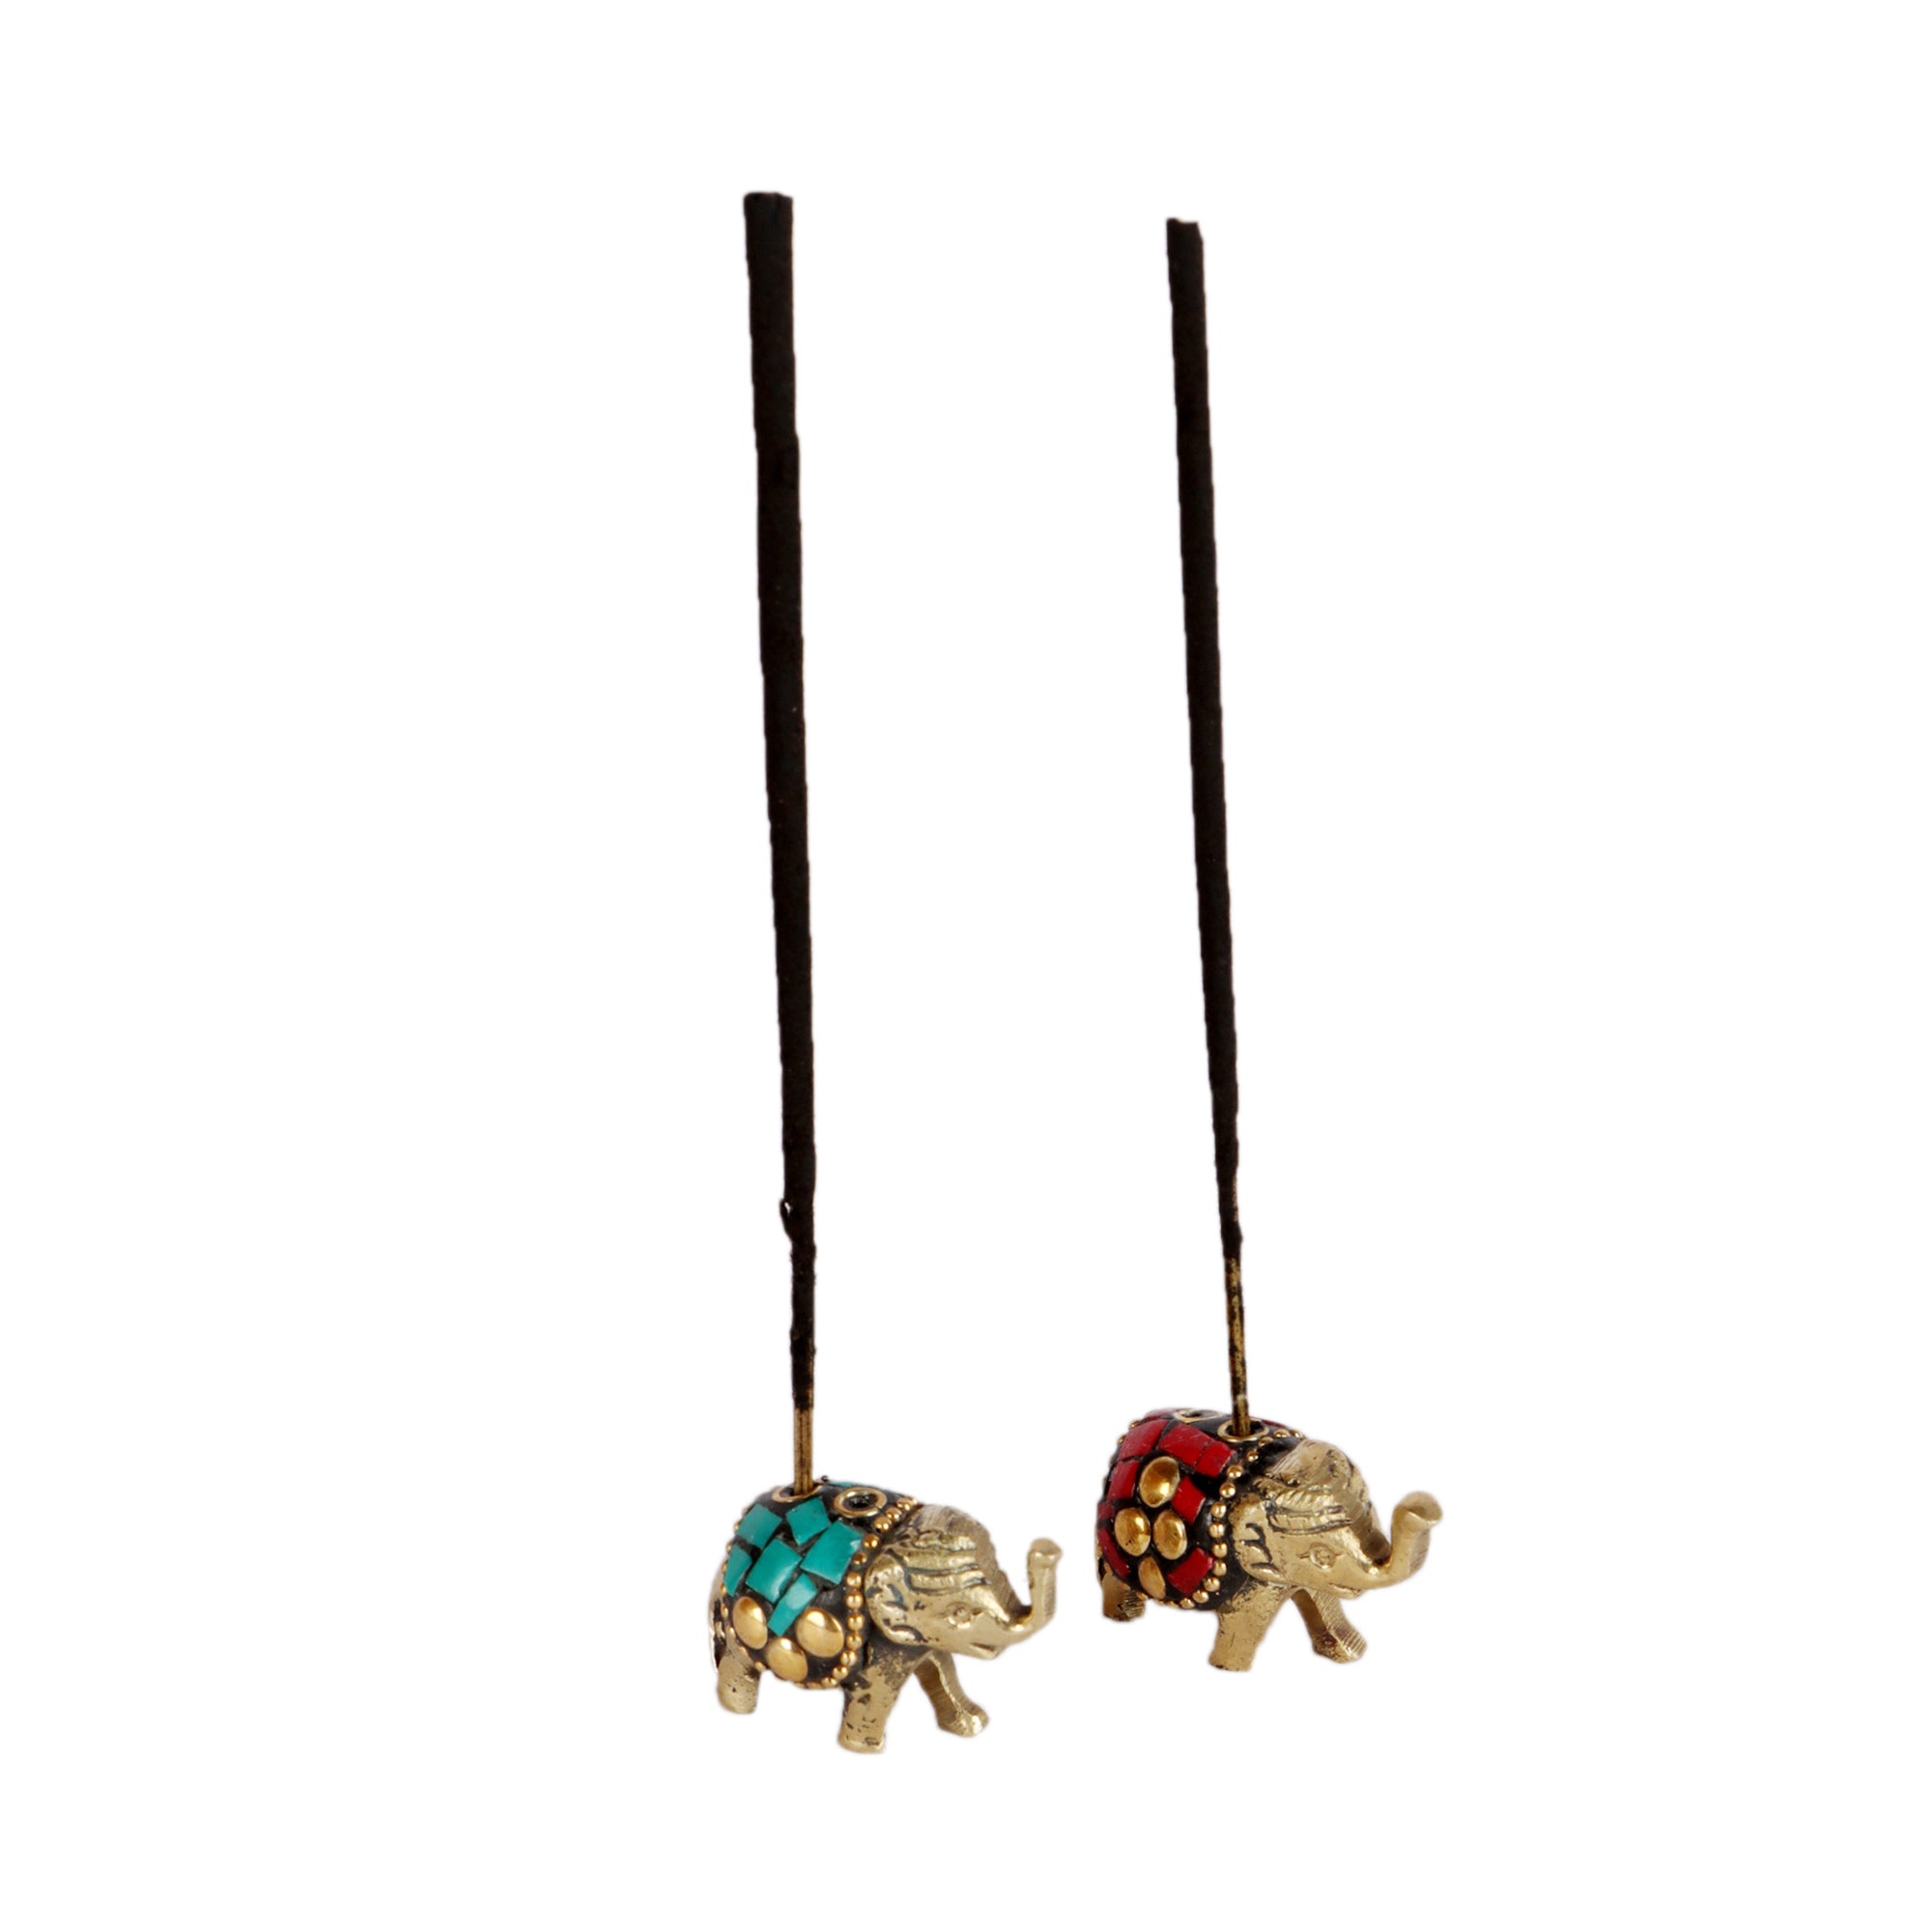 Tiny Elephants - Incense Holders (set of 2)